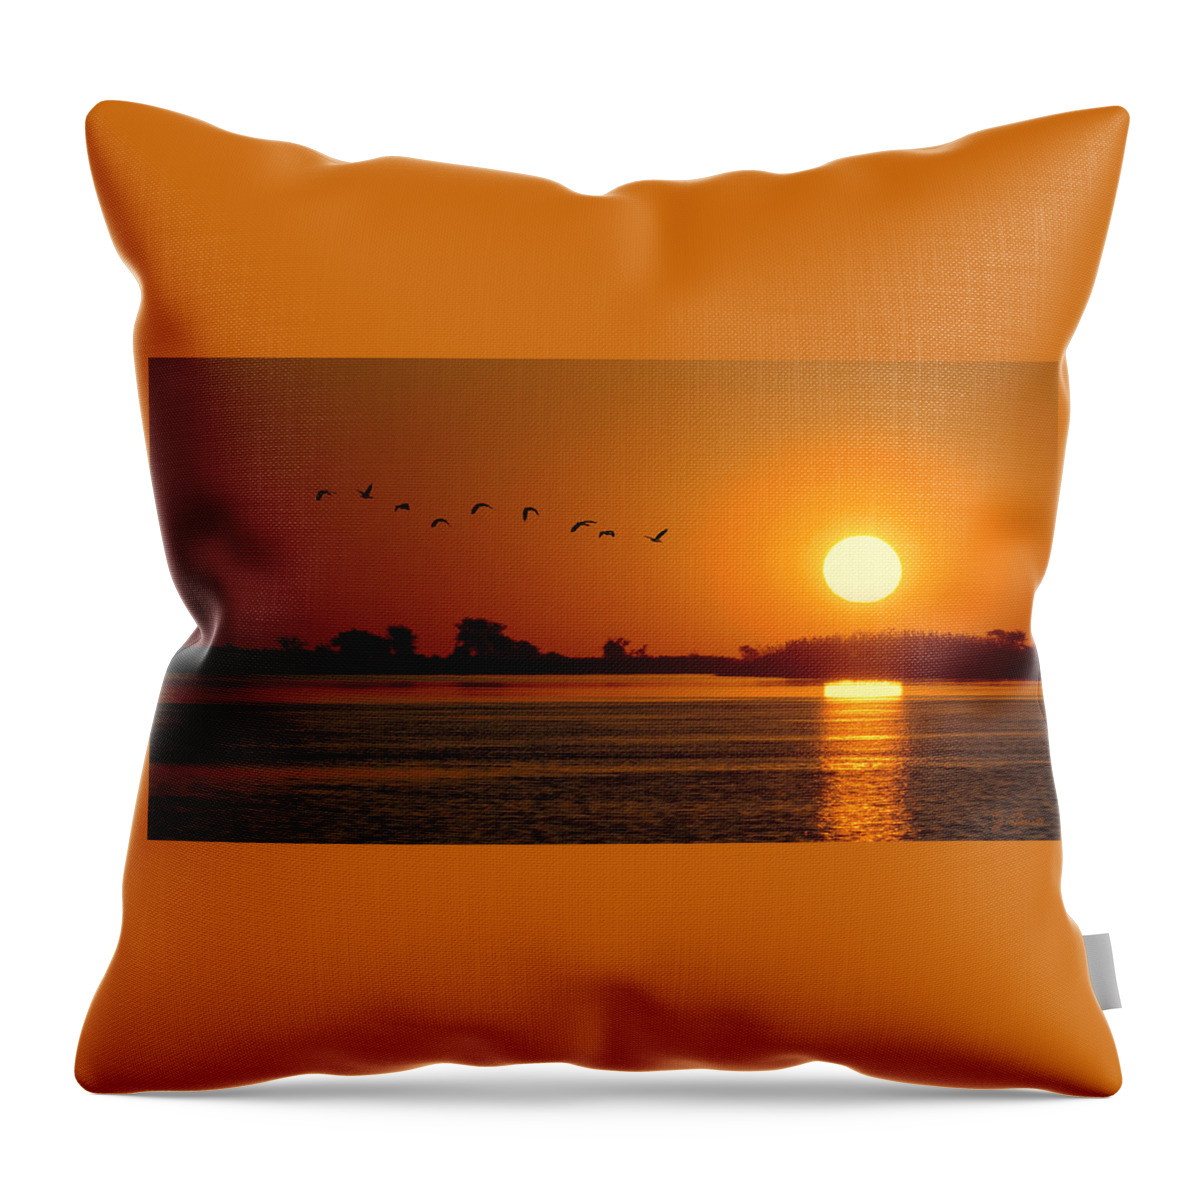 Africa Throw Pillow featuring the photograph Impalila Island Sunset No. 1 by Joe Bonita